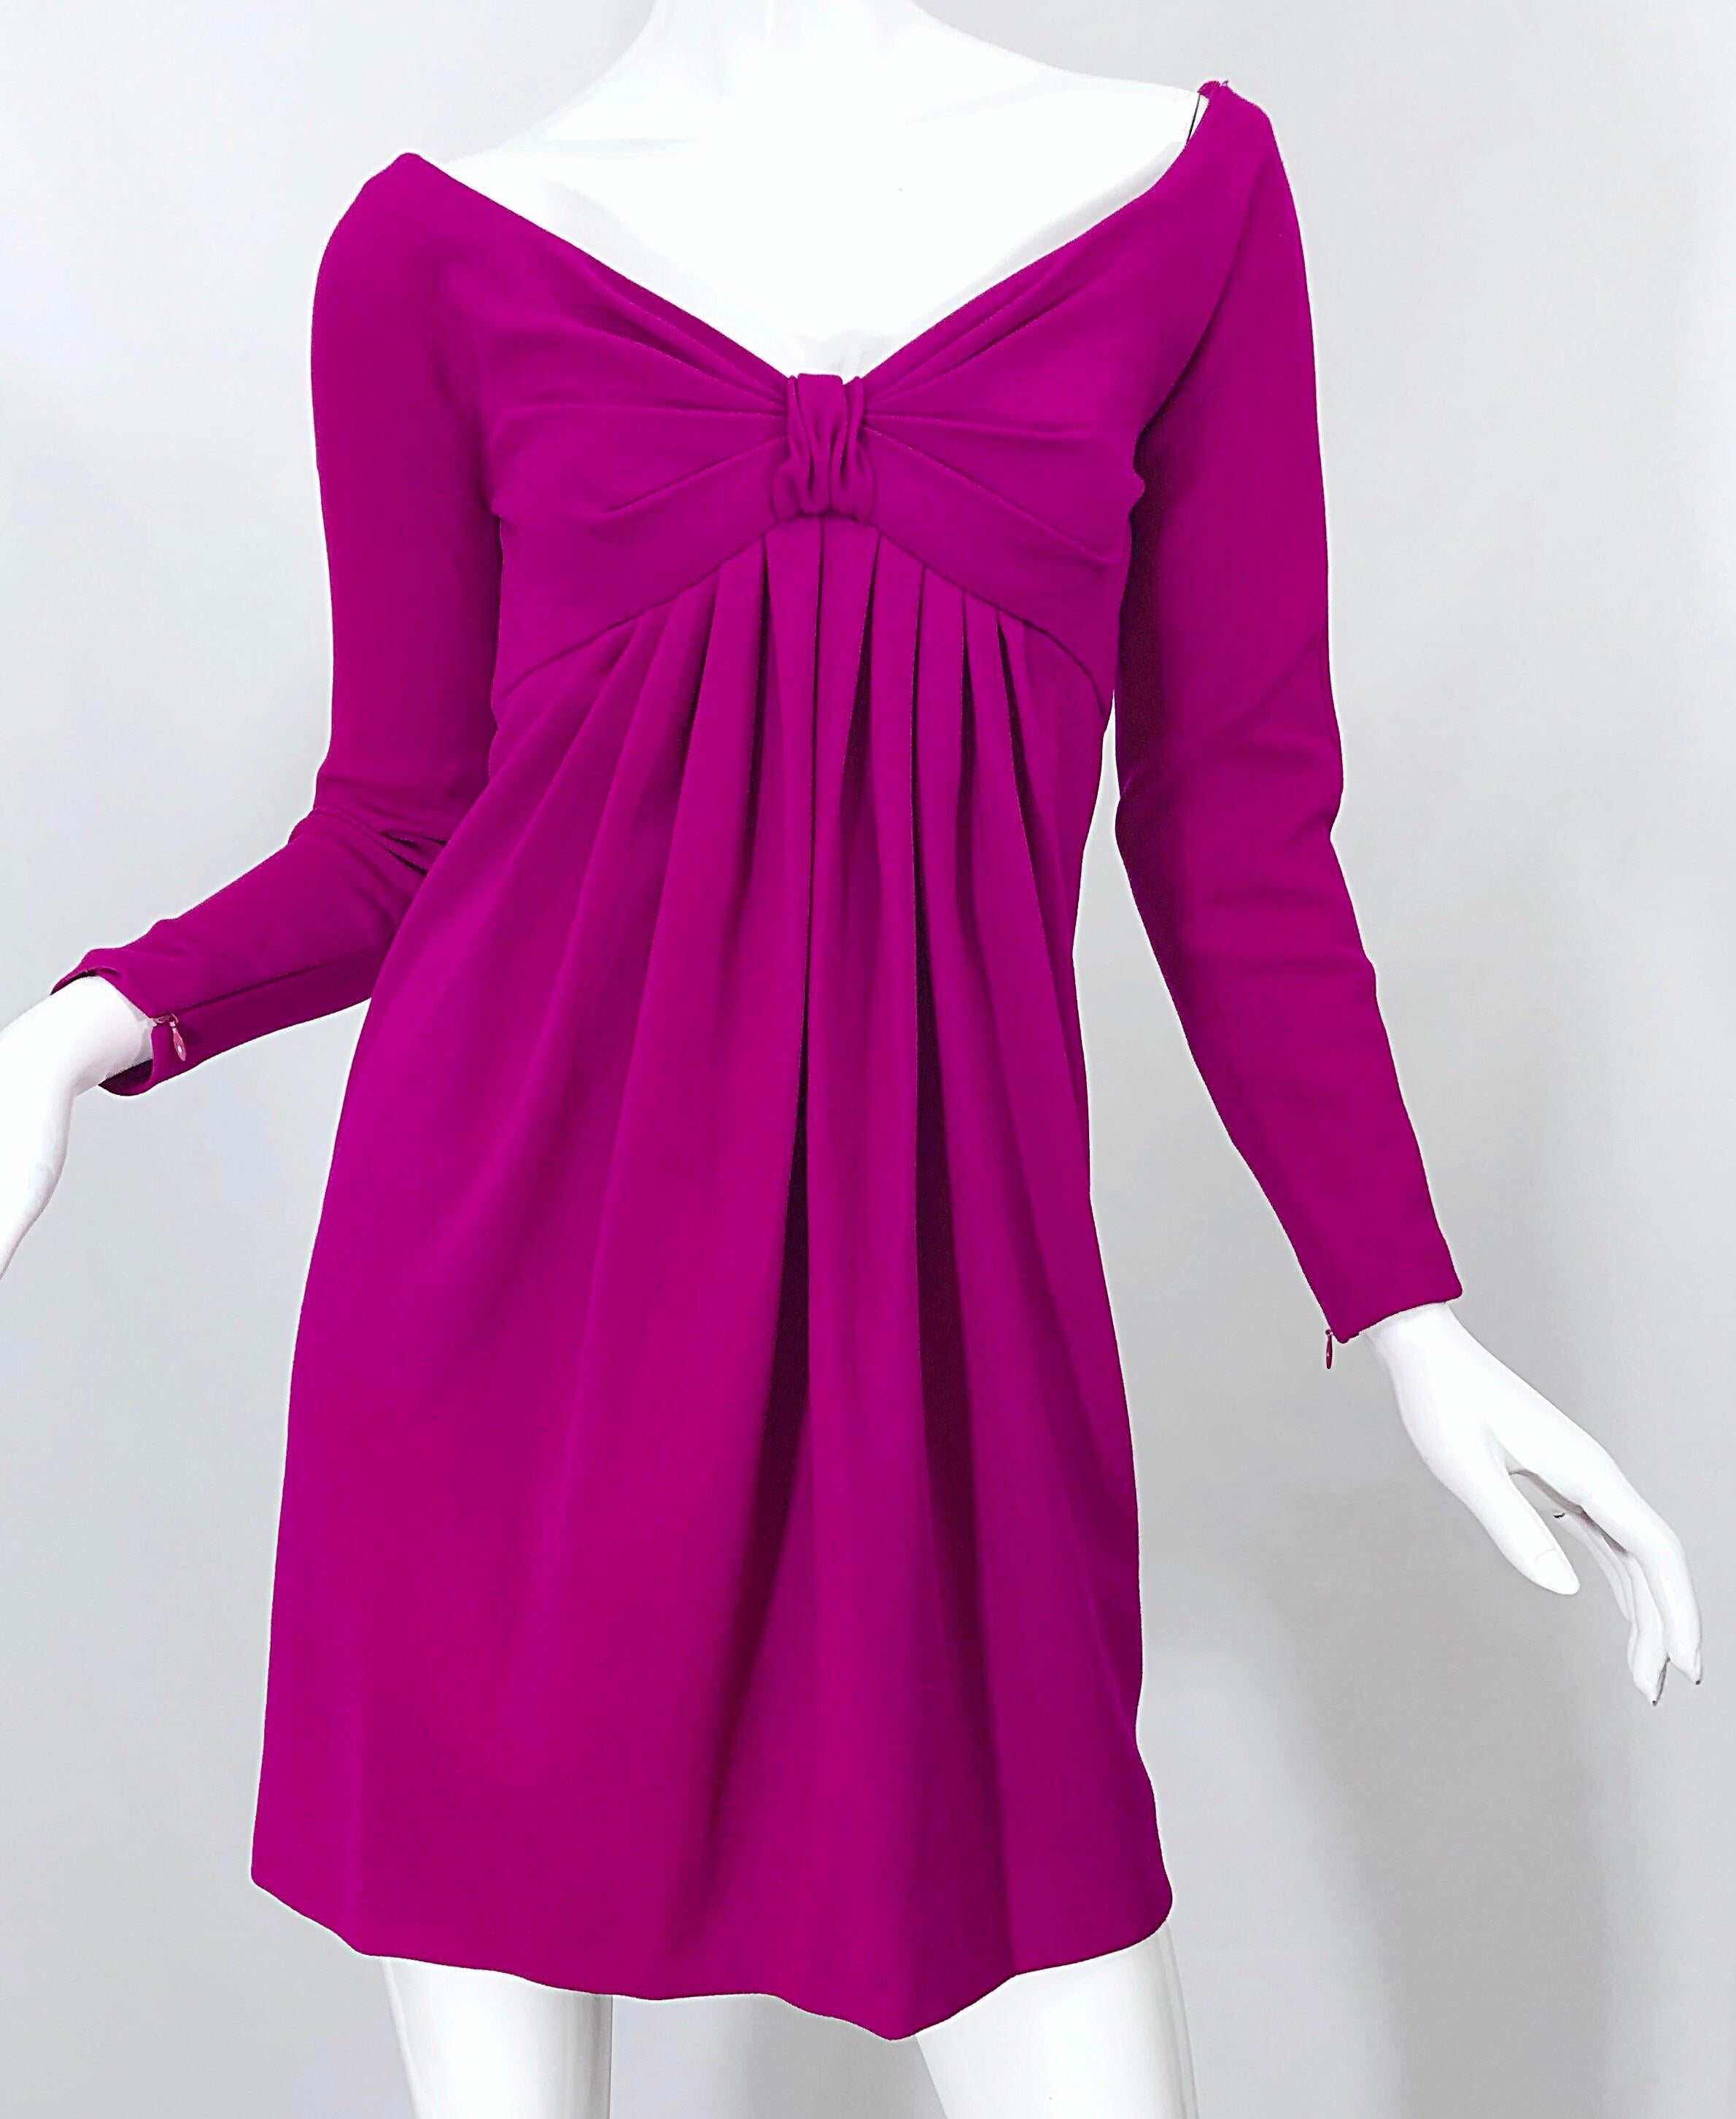 Carolyne Roehm 1990s Fuchsia Hot Pink Wool Vintage 90s Mini Empire Dress For Sale 3